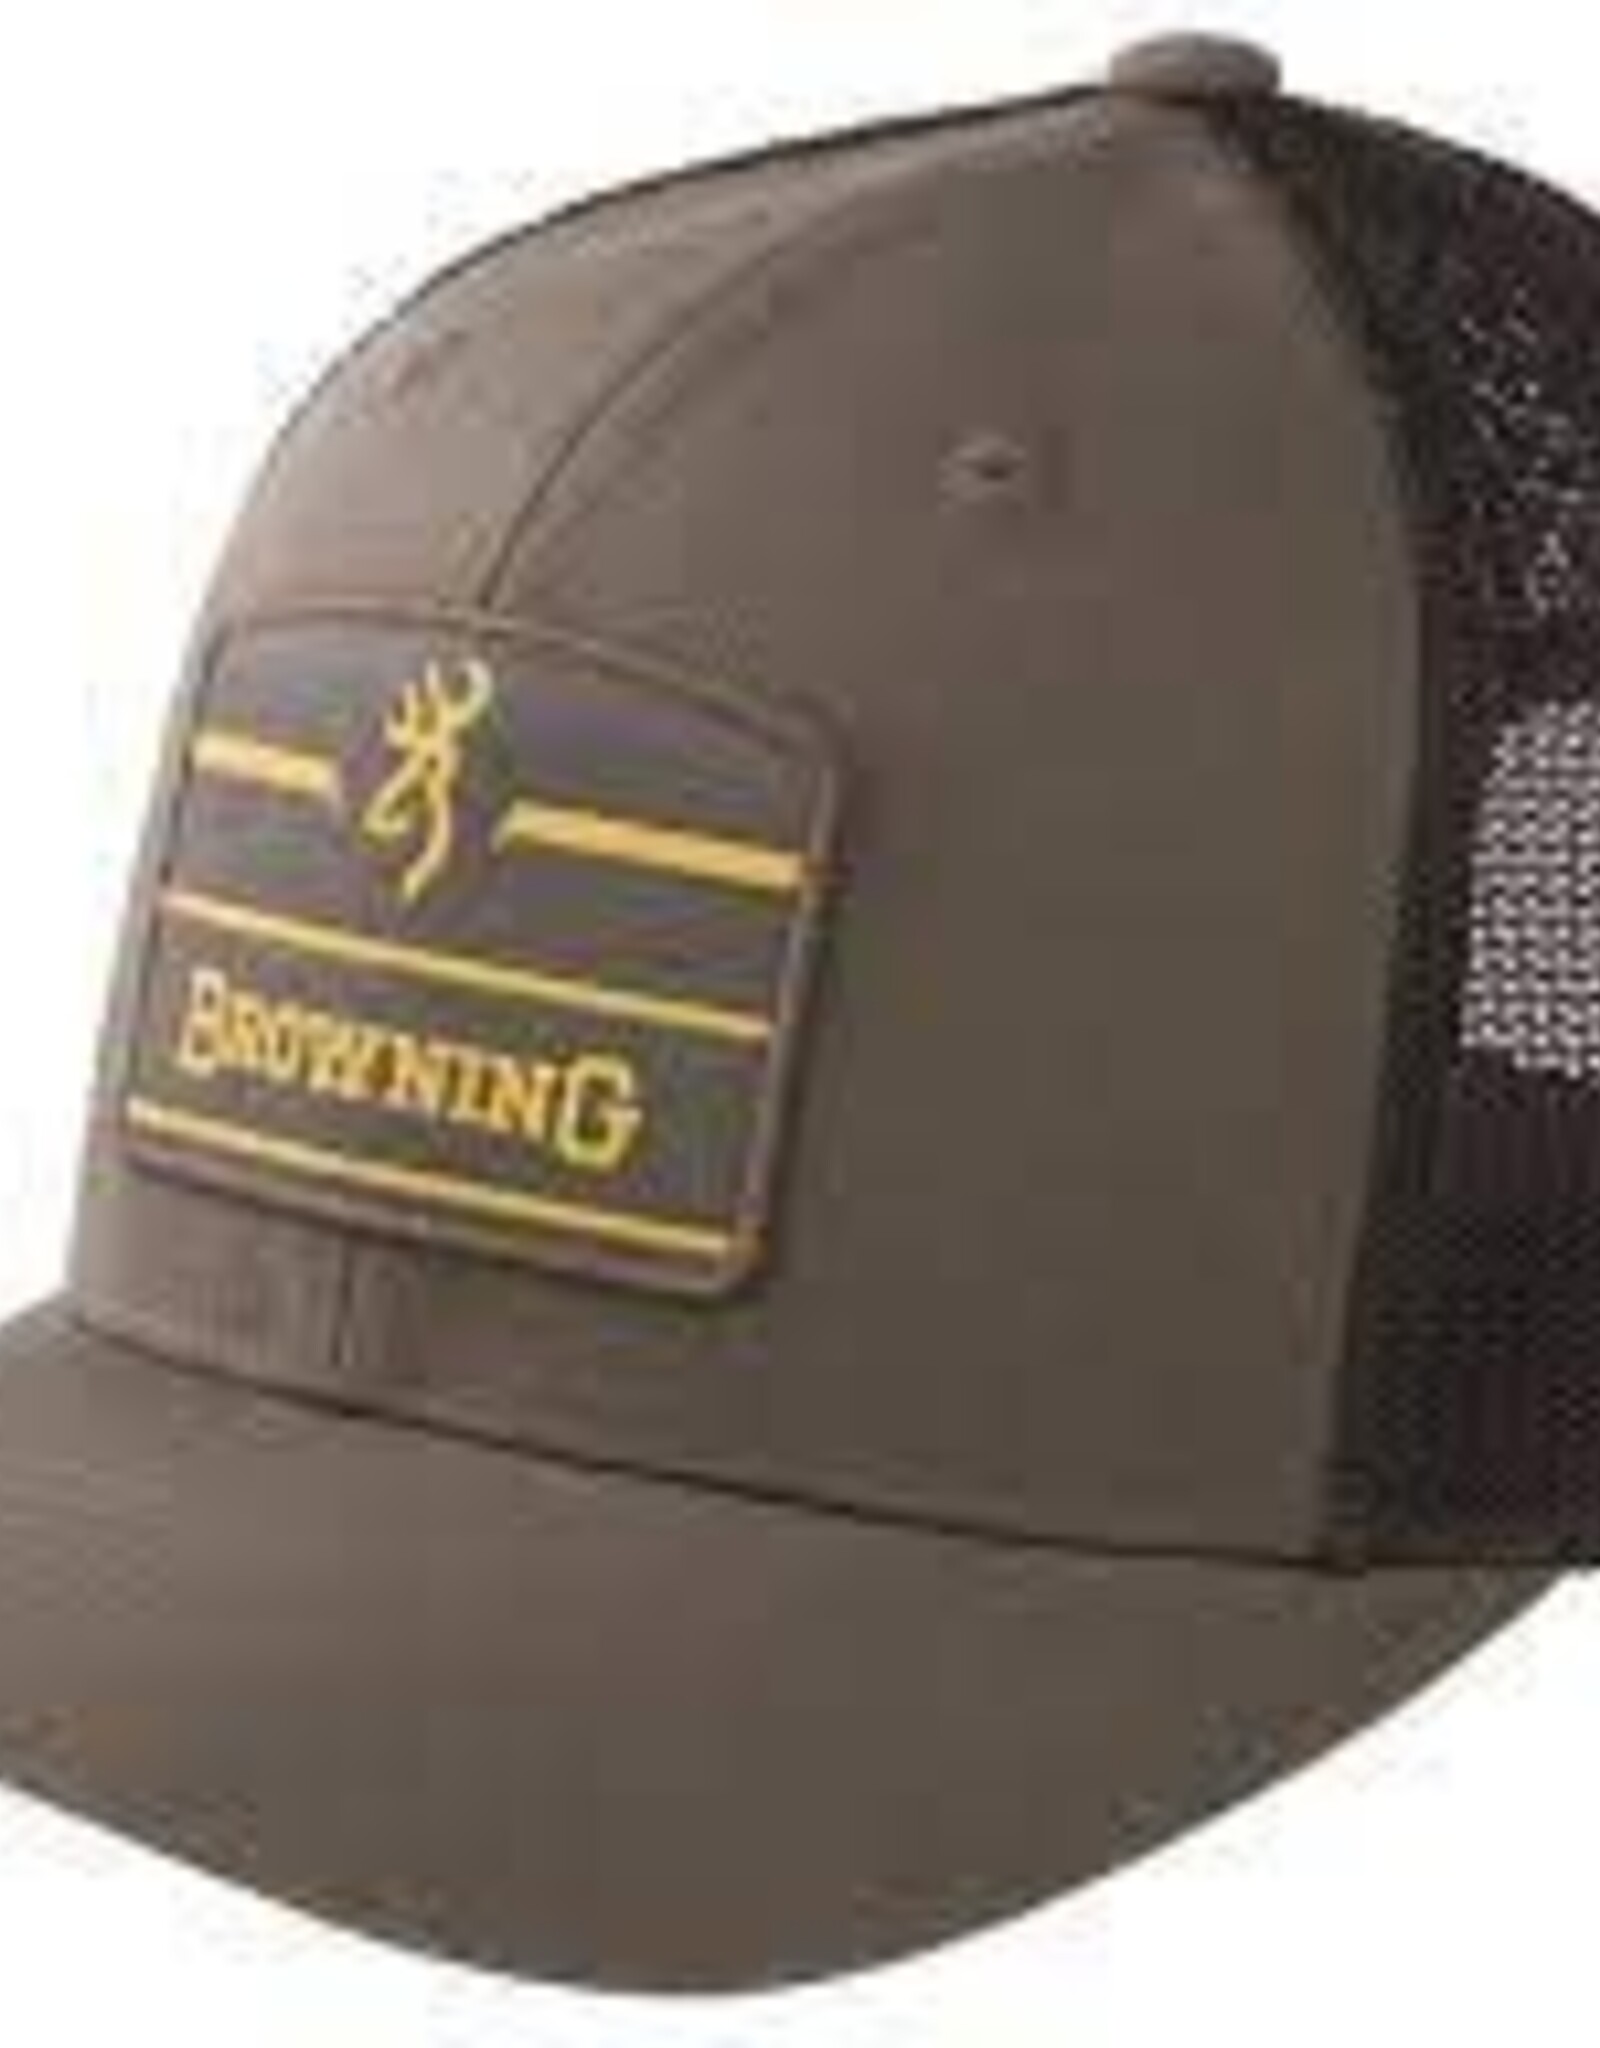 Browning Primer Cap